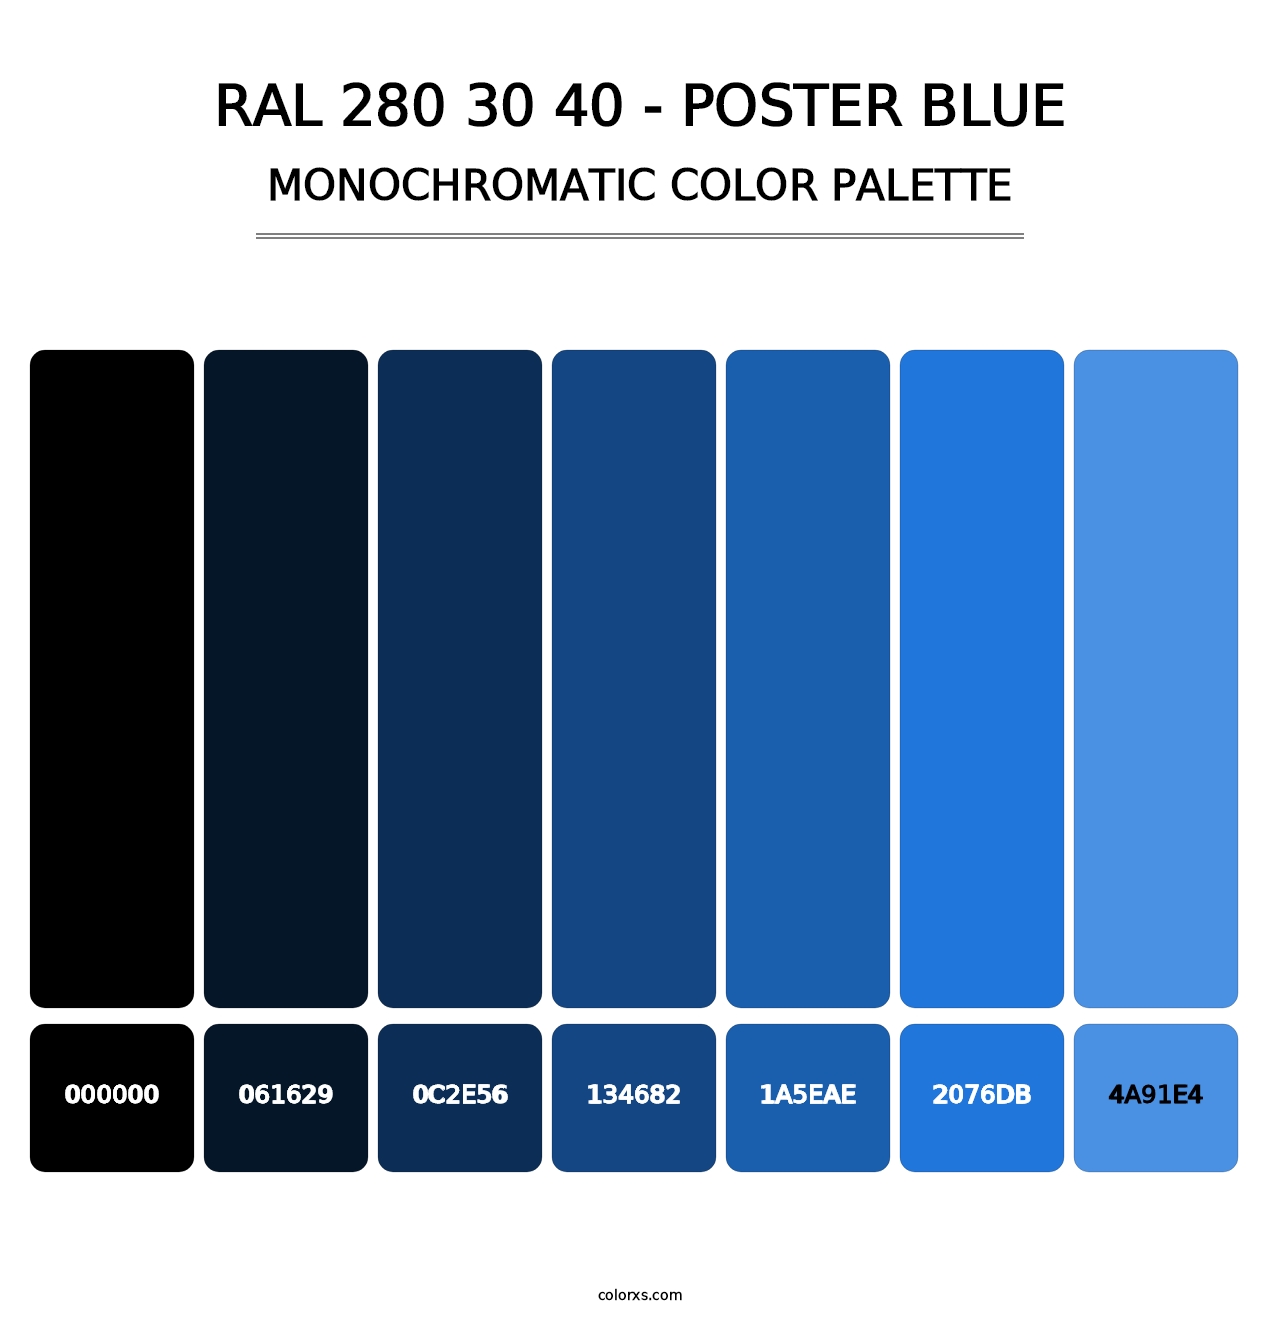 RAL 280 30 40 - Poster Blue - Monochromatic Color Palette